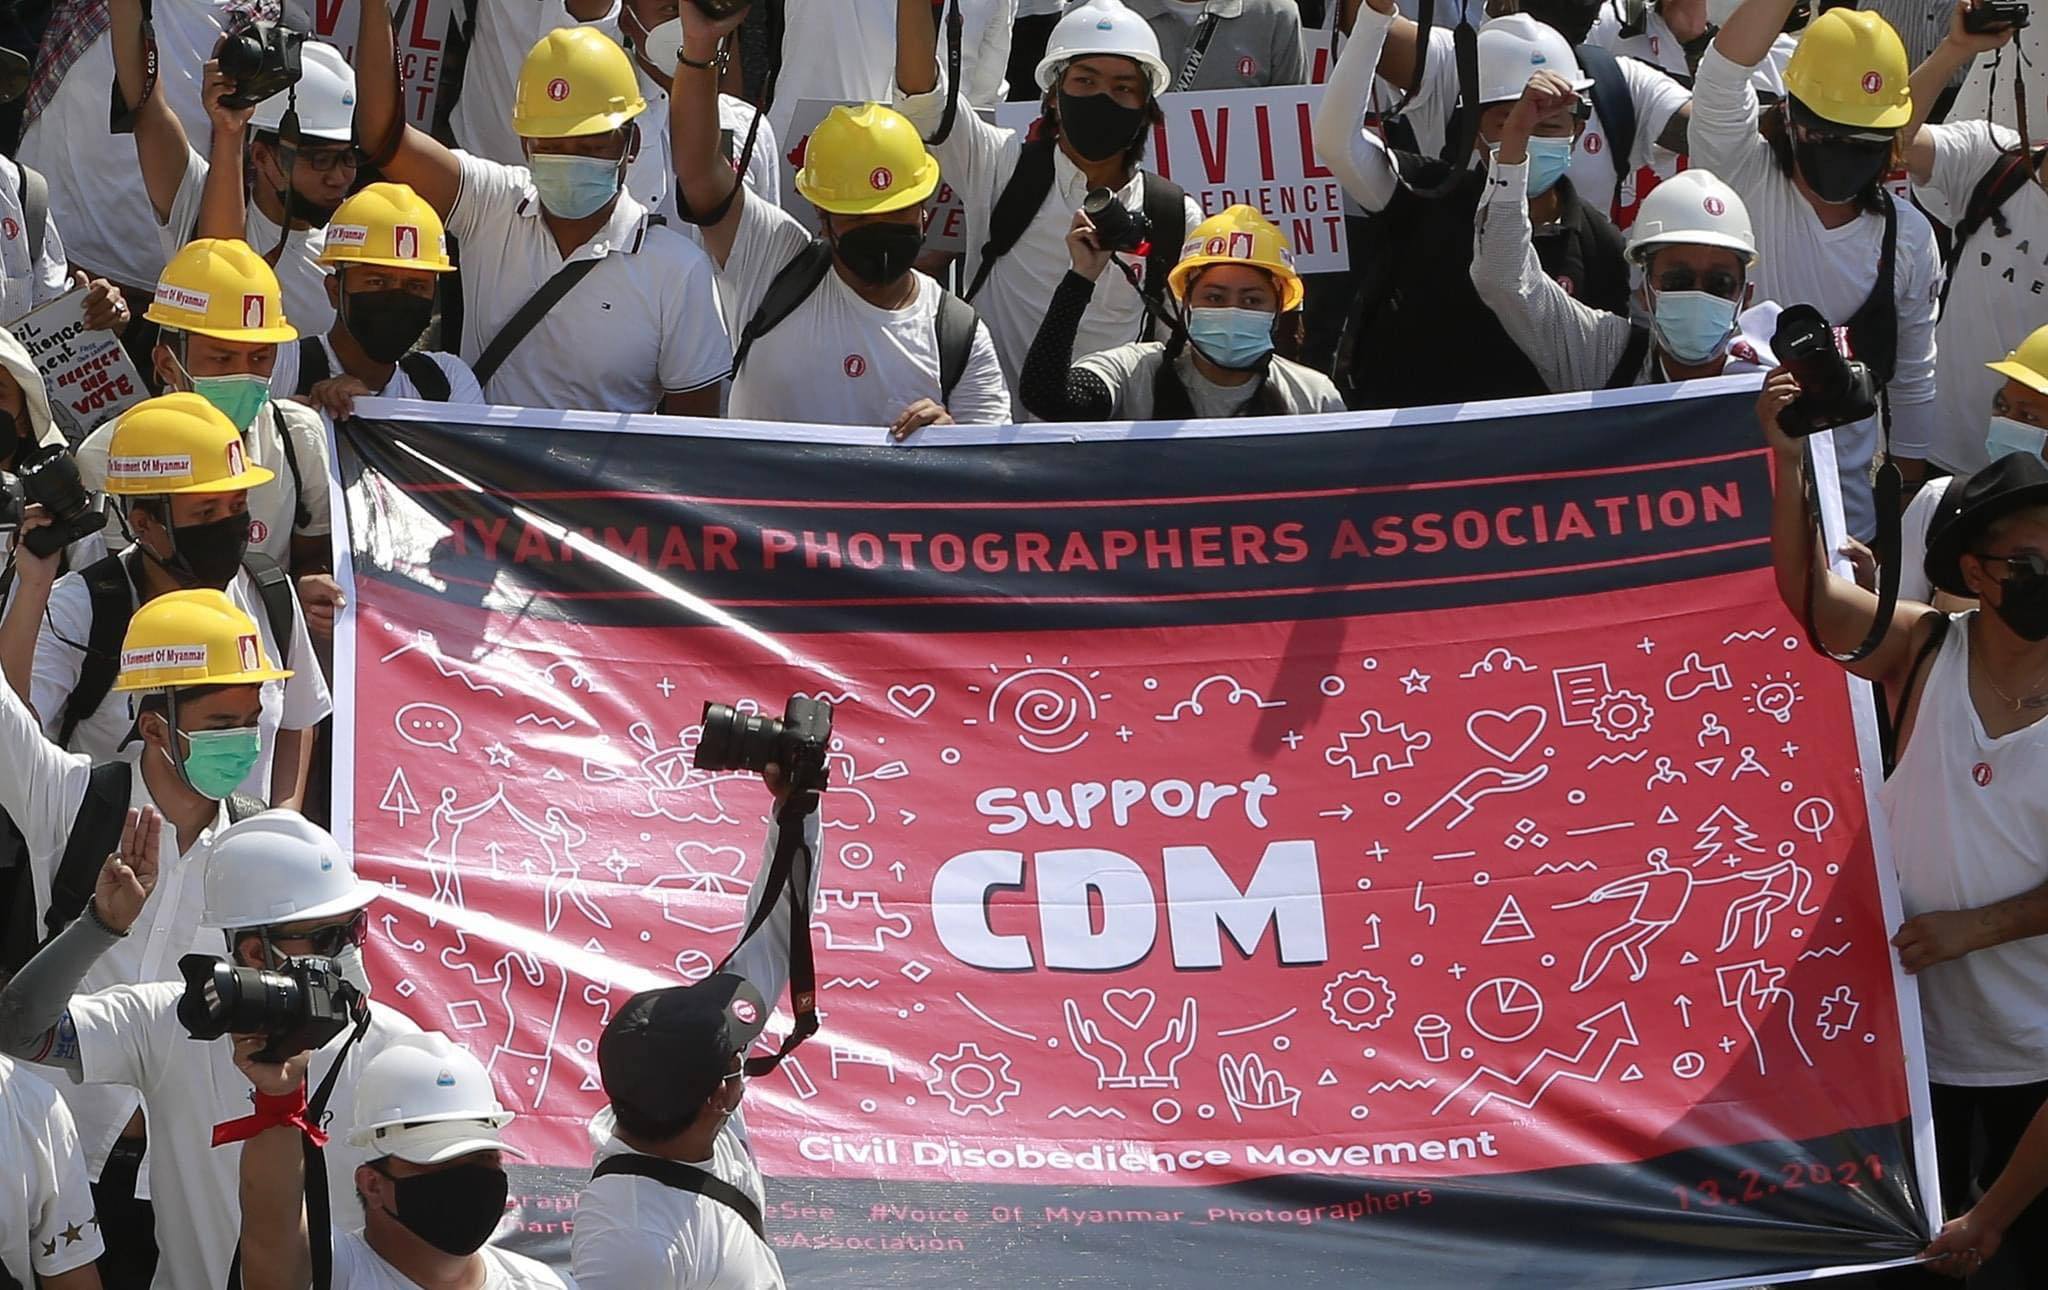 (CDM လှုပ်ရှားမှုတွင် ပါဝင်စေရန် လှုံ့ဆော်ဆန္ဒပြနေသည်ကို ၂၀၂၁ ဖေဖော်ဝါရီ ၁၃ရက်က တွေ့ရစဥ်၊ ဓာတ်ပုံ - PS)